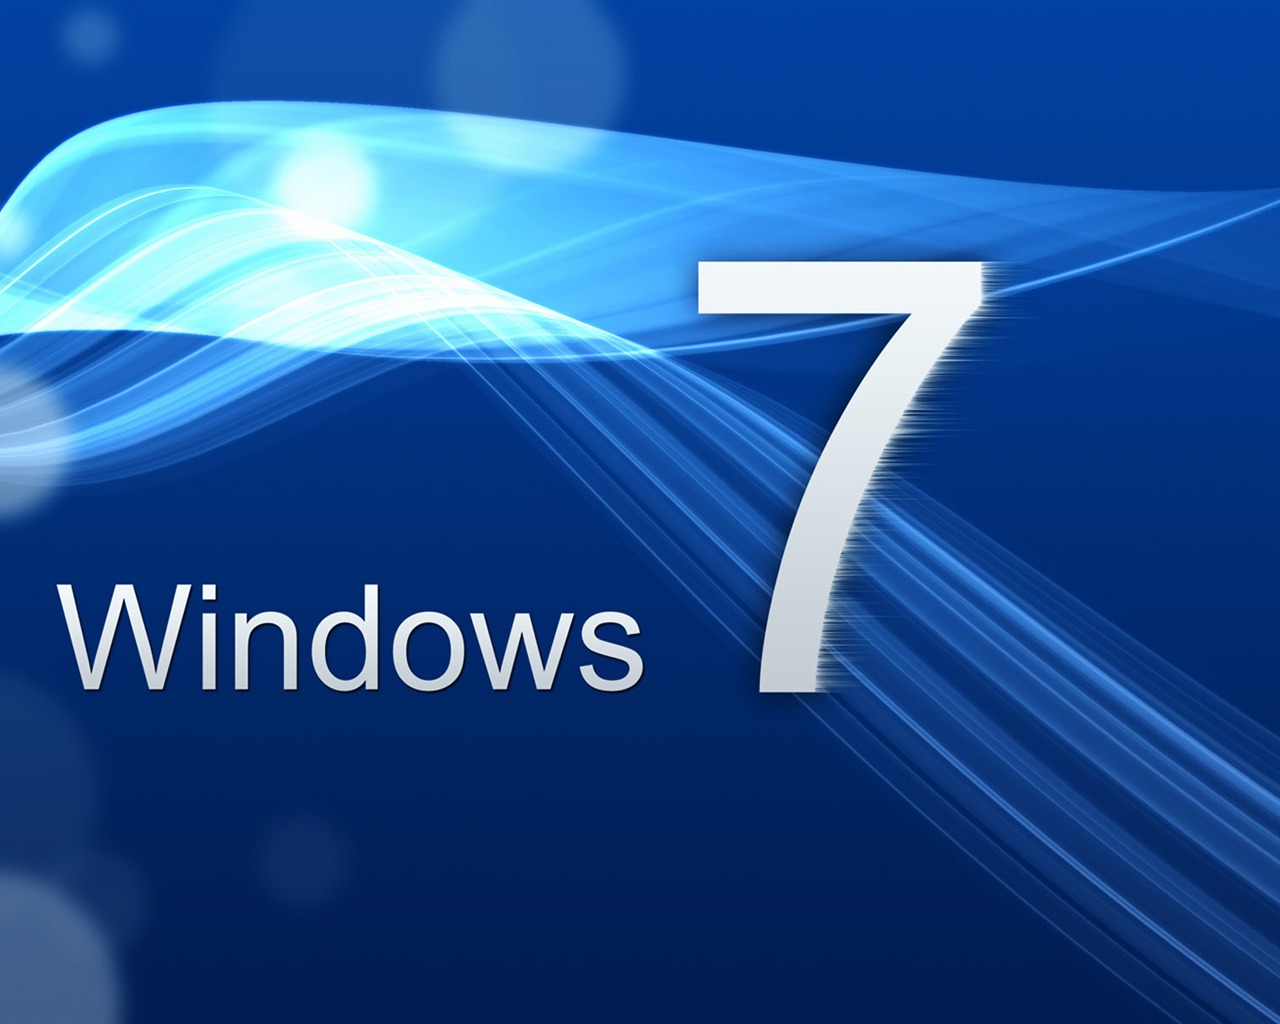 Windows 7 Wallpaper Themes Download 1280x1024 Wallpaper